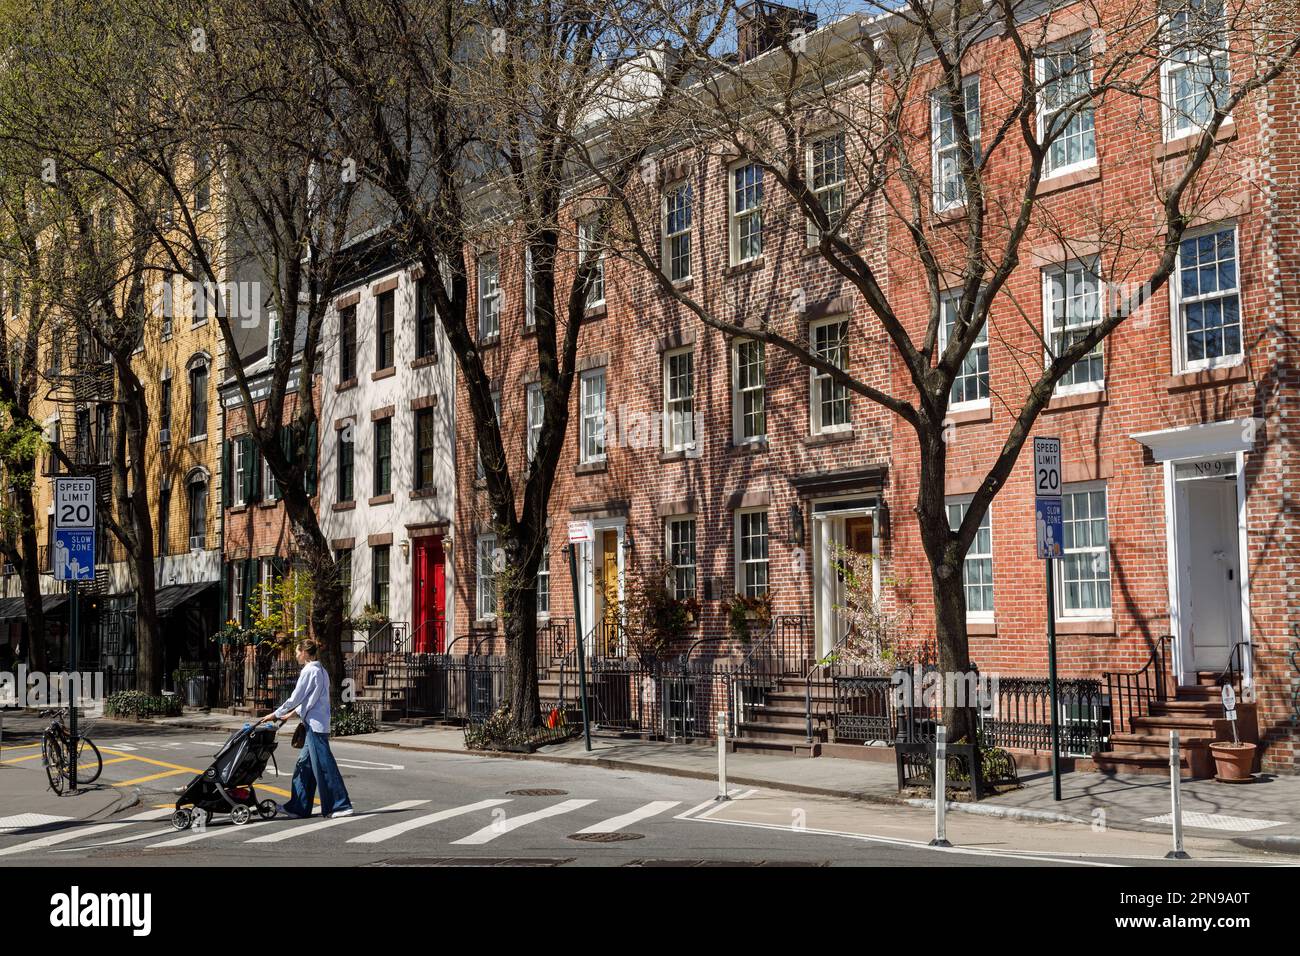 Commerce Street aka Cherry Lane, quaint brick homes in Greenwich Village, New York City. Stock Photo